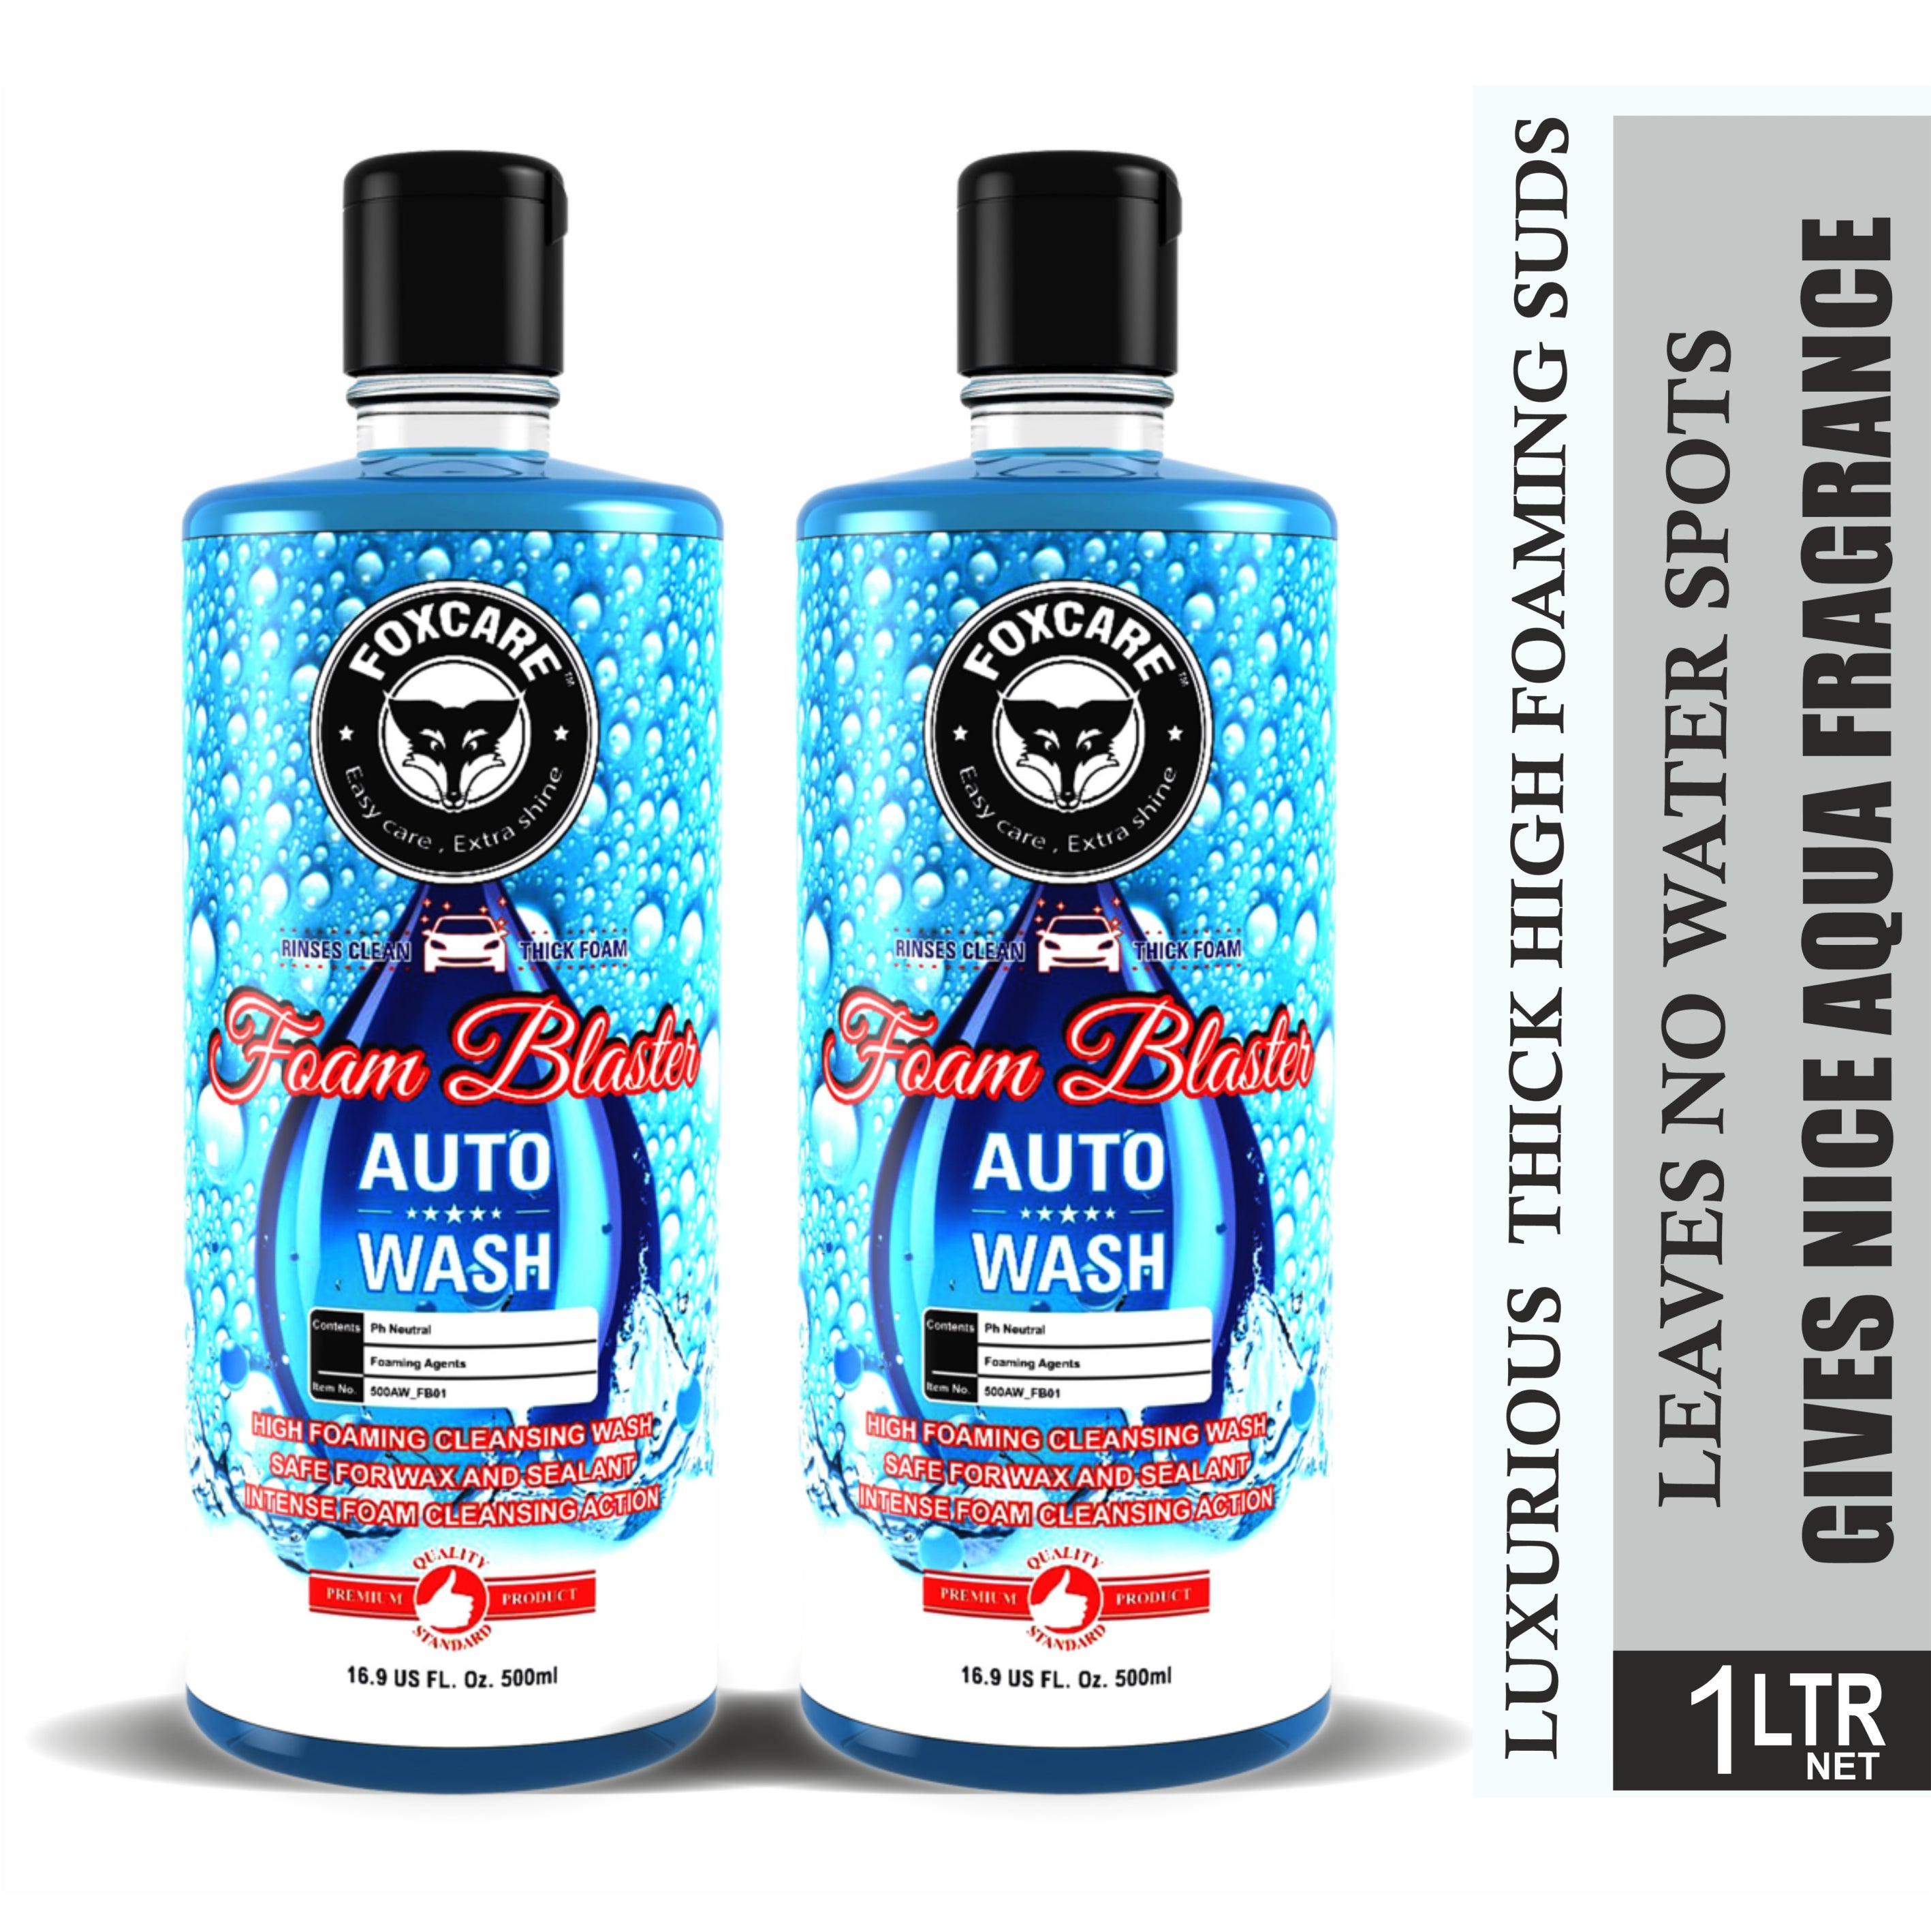 Foxcare Foam Blaster - Auto Wash Shampoo 1 Liter Net